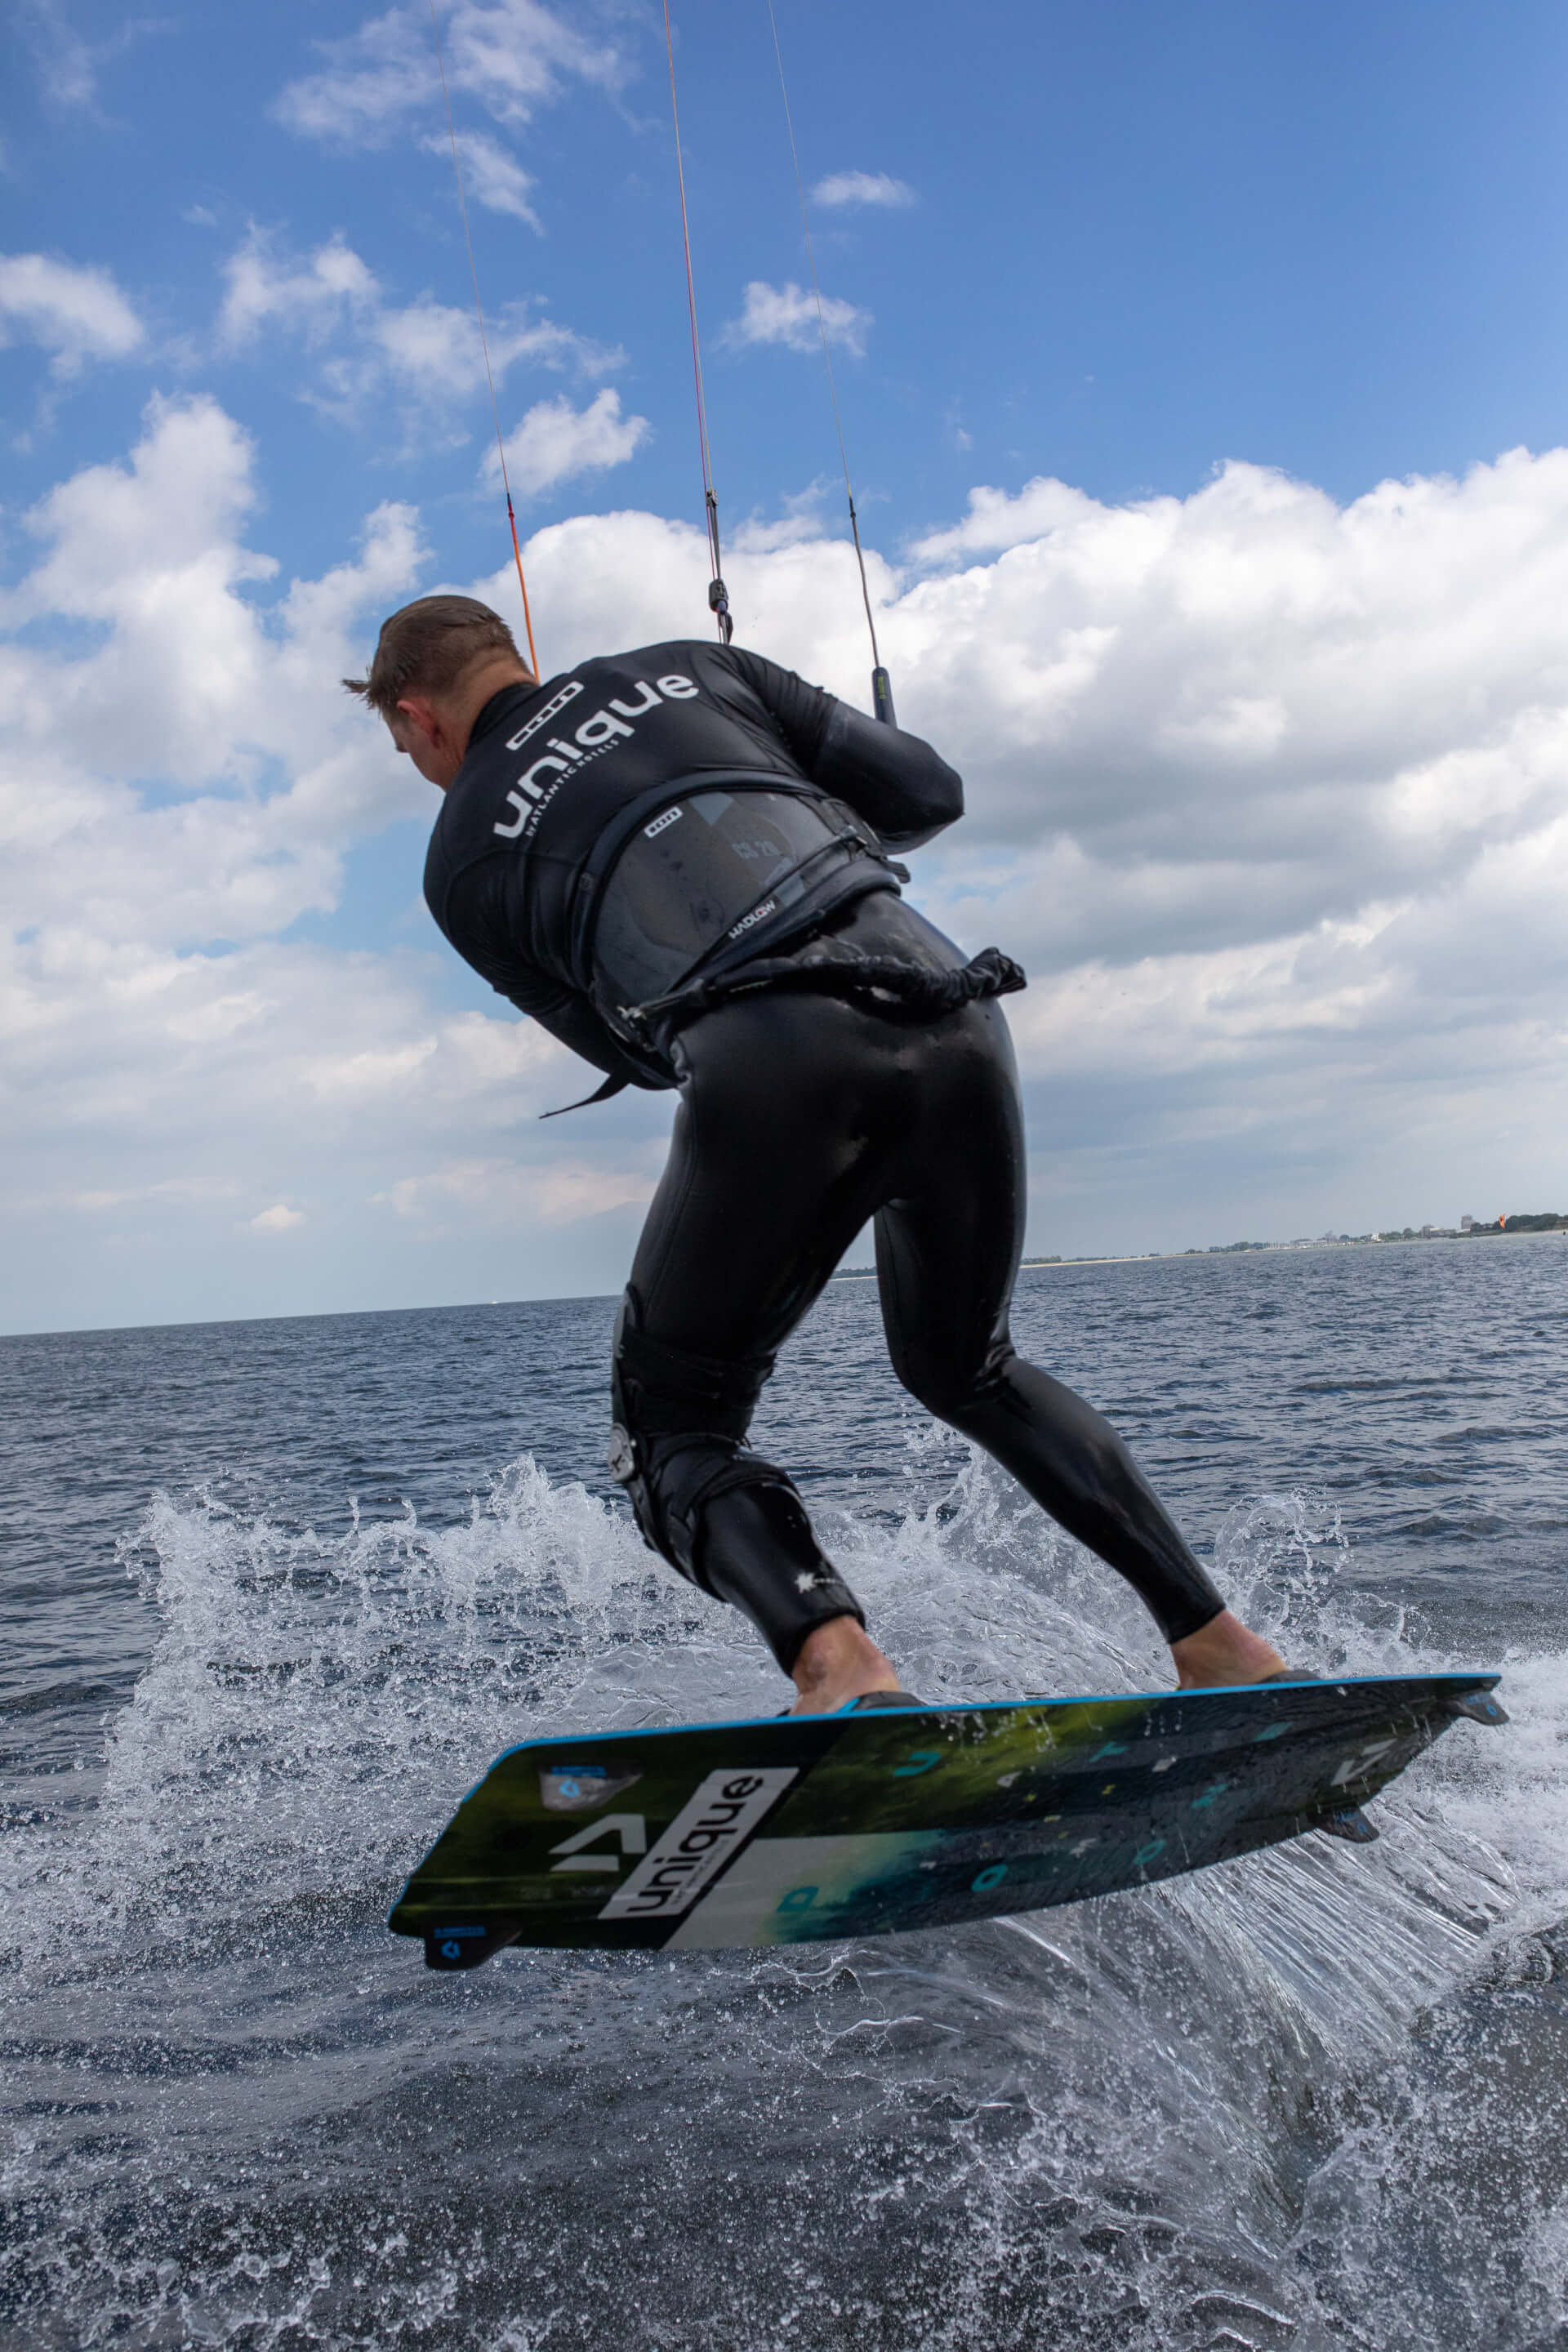 Kite Surfer Jendric Burkhardt beim Kitesurfen auf dem Meer bei Kiel 